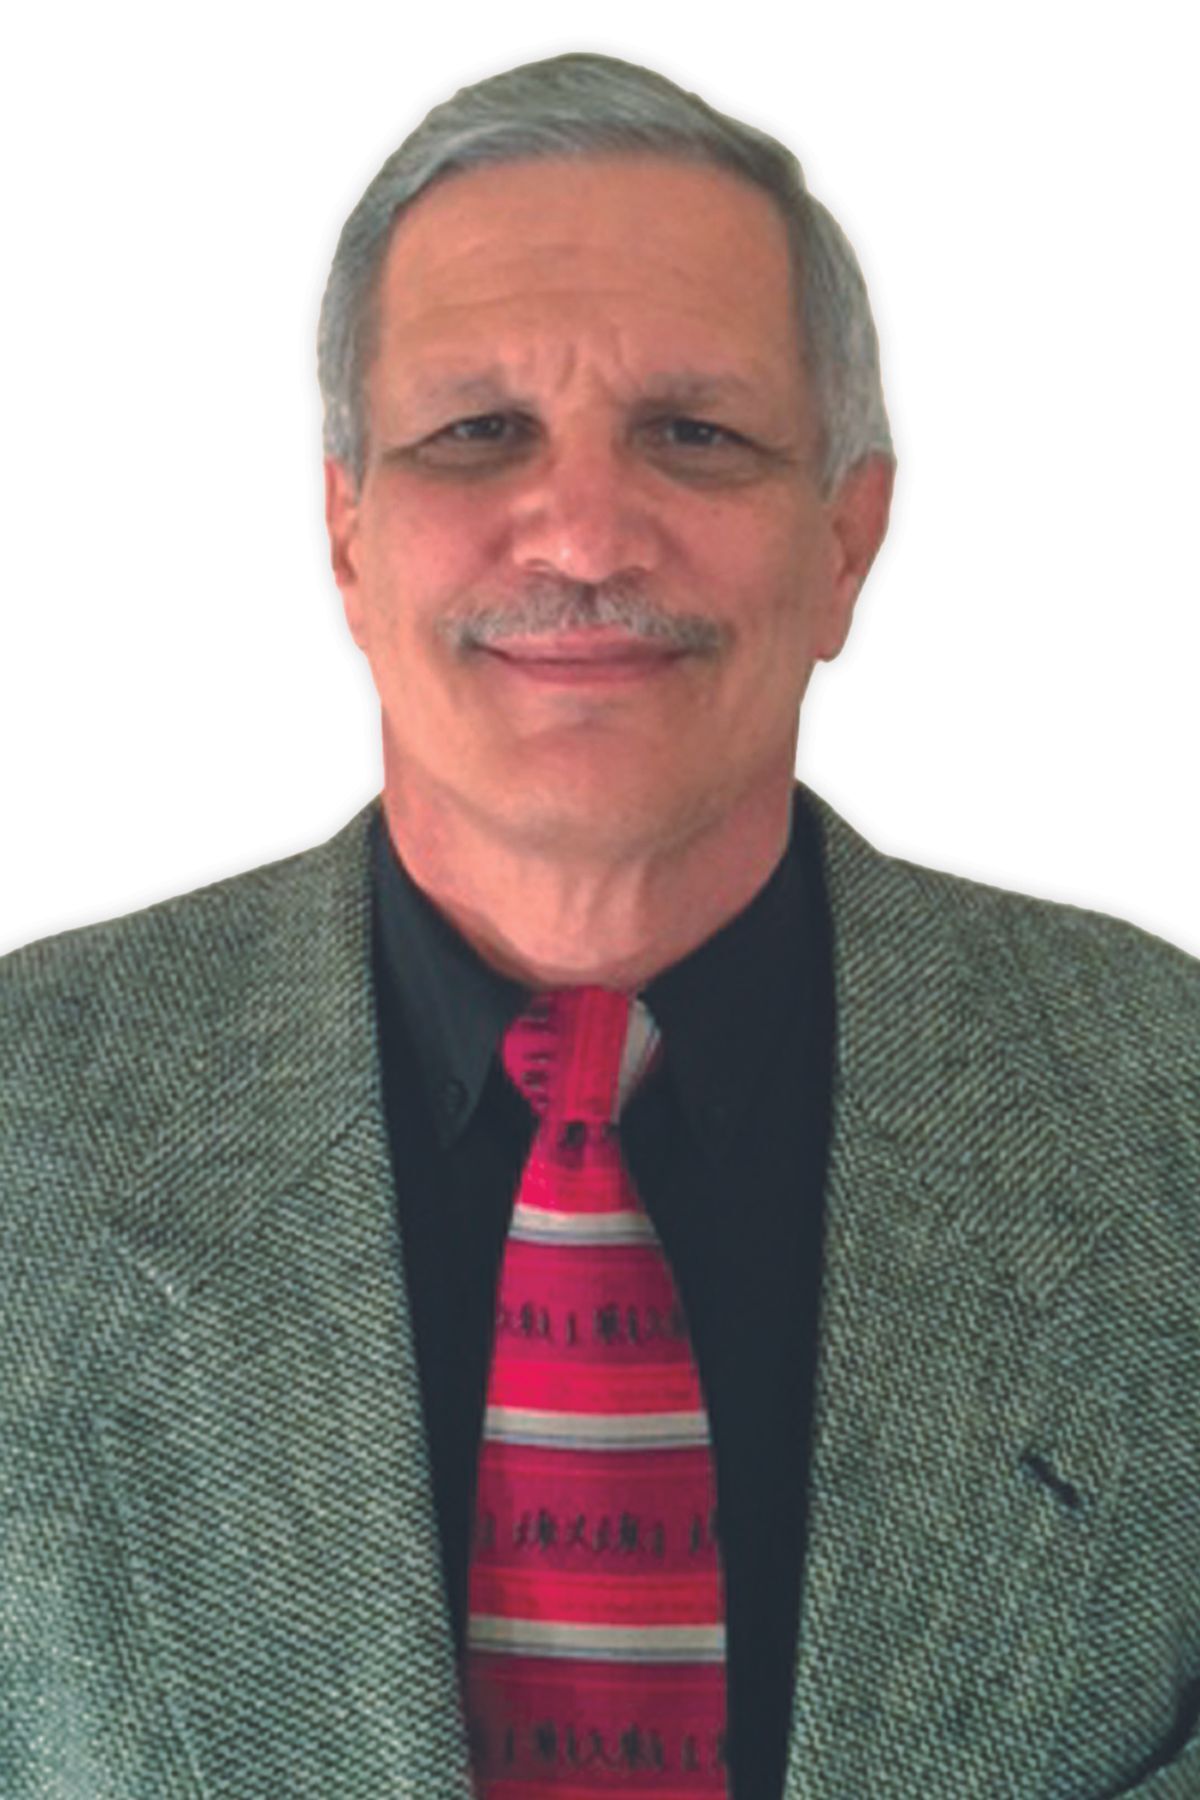 Executive Director – Neal L. Zimmerman, Jr.